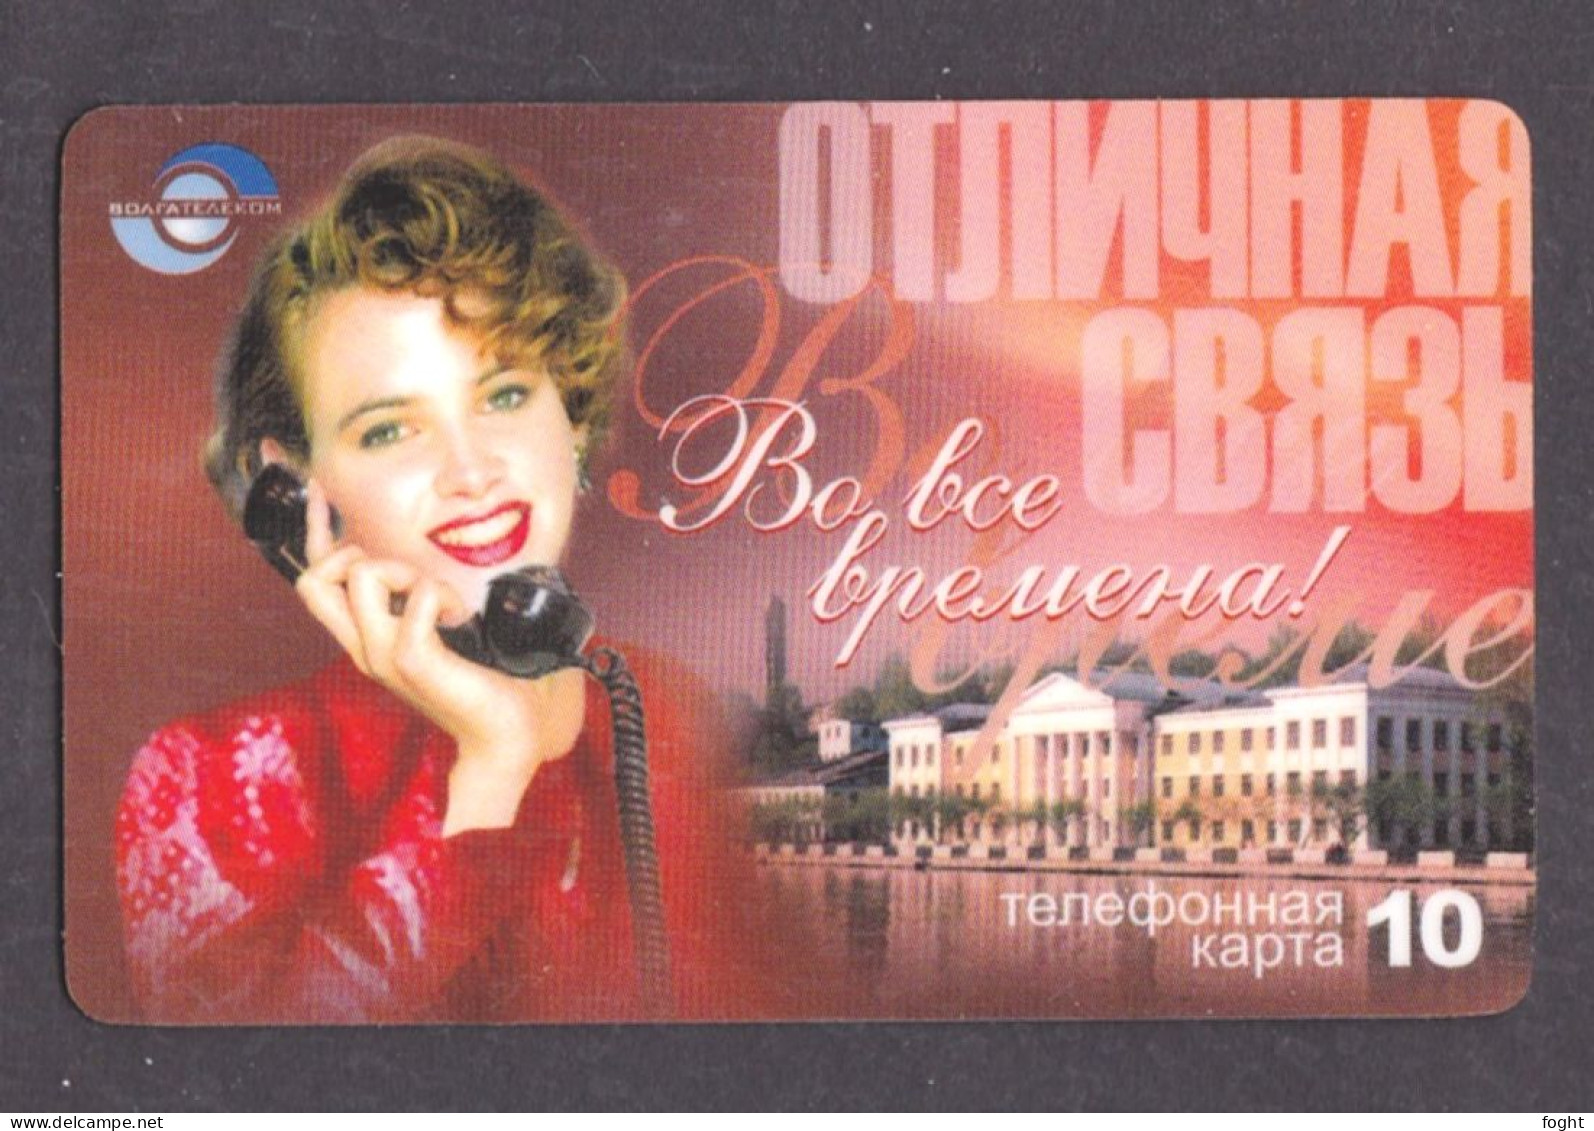 2003 ЕЮ Remote Memory Russia ,Volga Telecom-Izhevsk,Good Connection All The Time!,10 Units Card,Col:RU-PRE-UDM-0272 - Russia